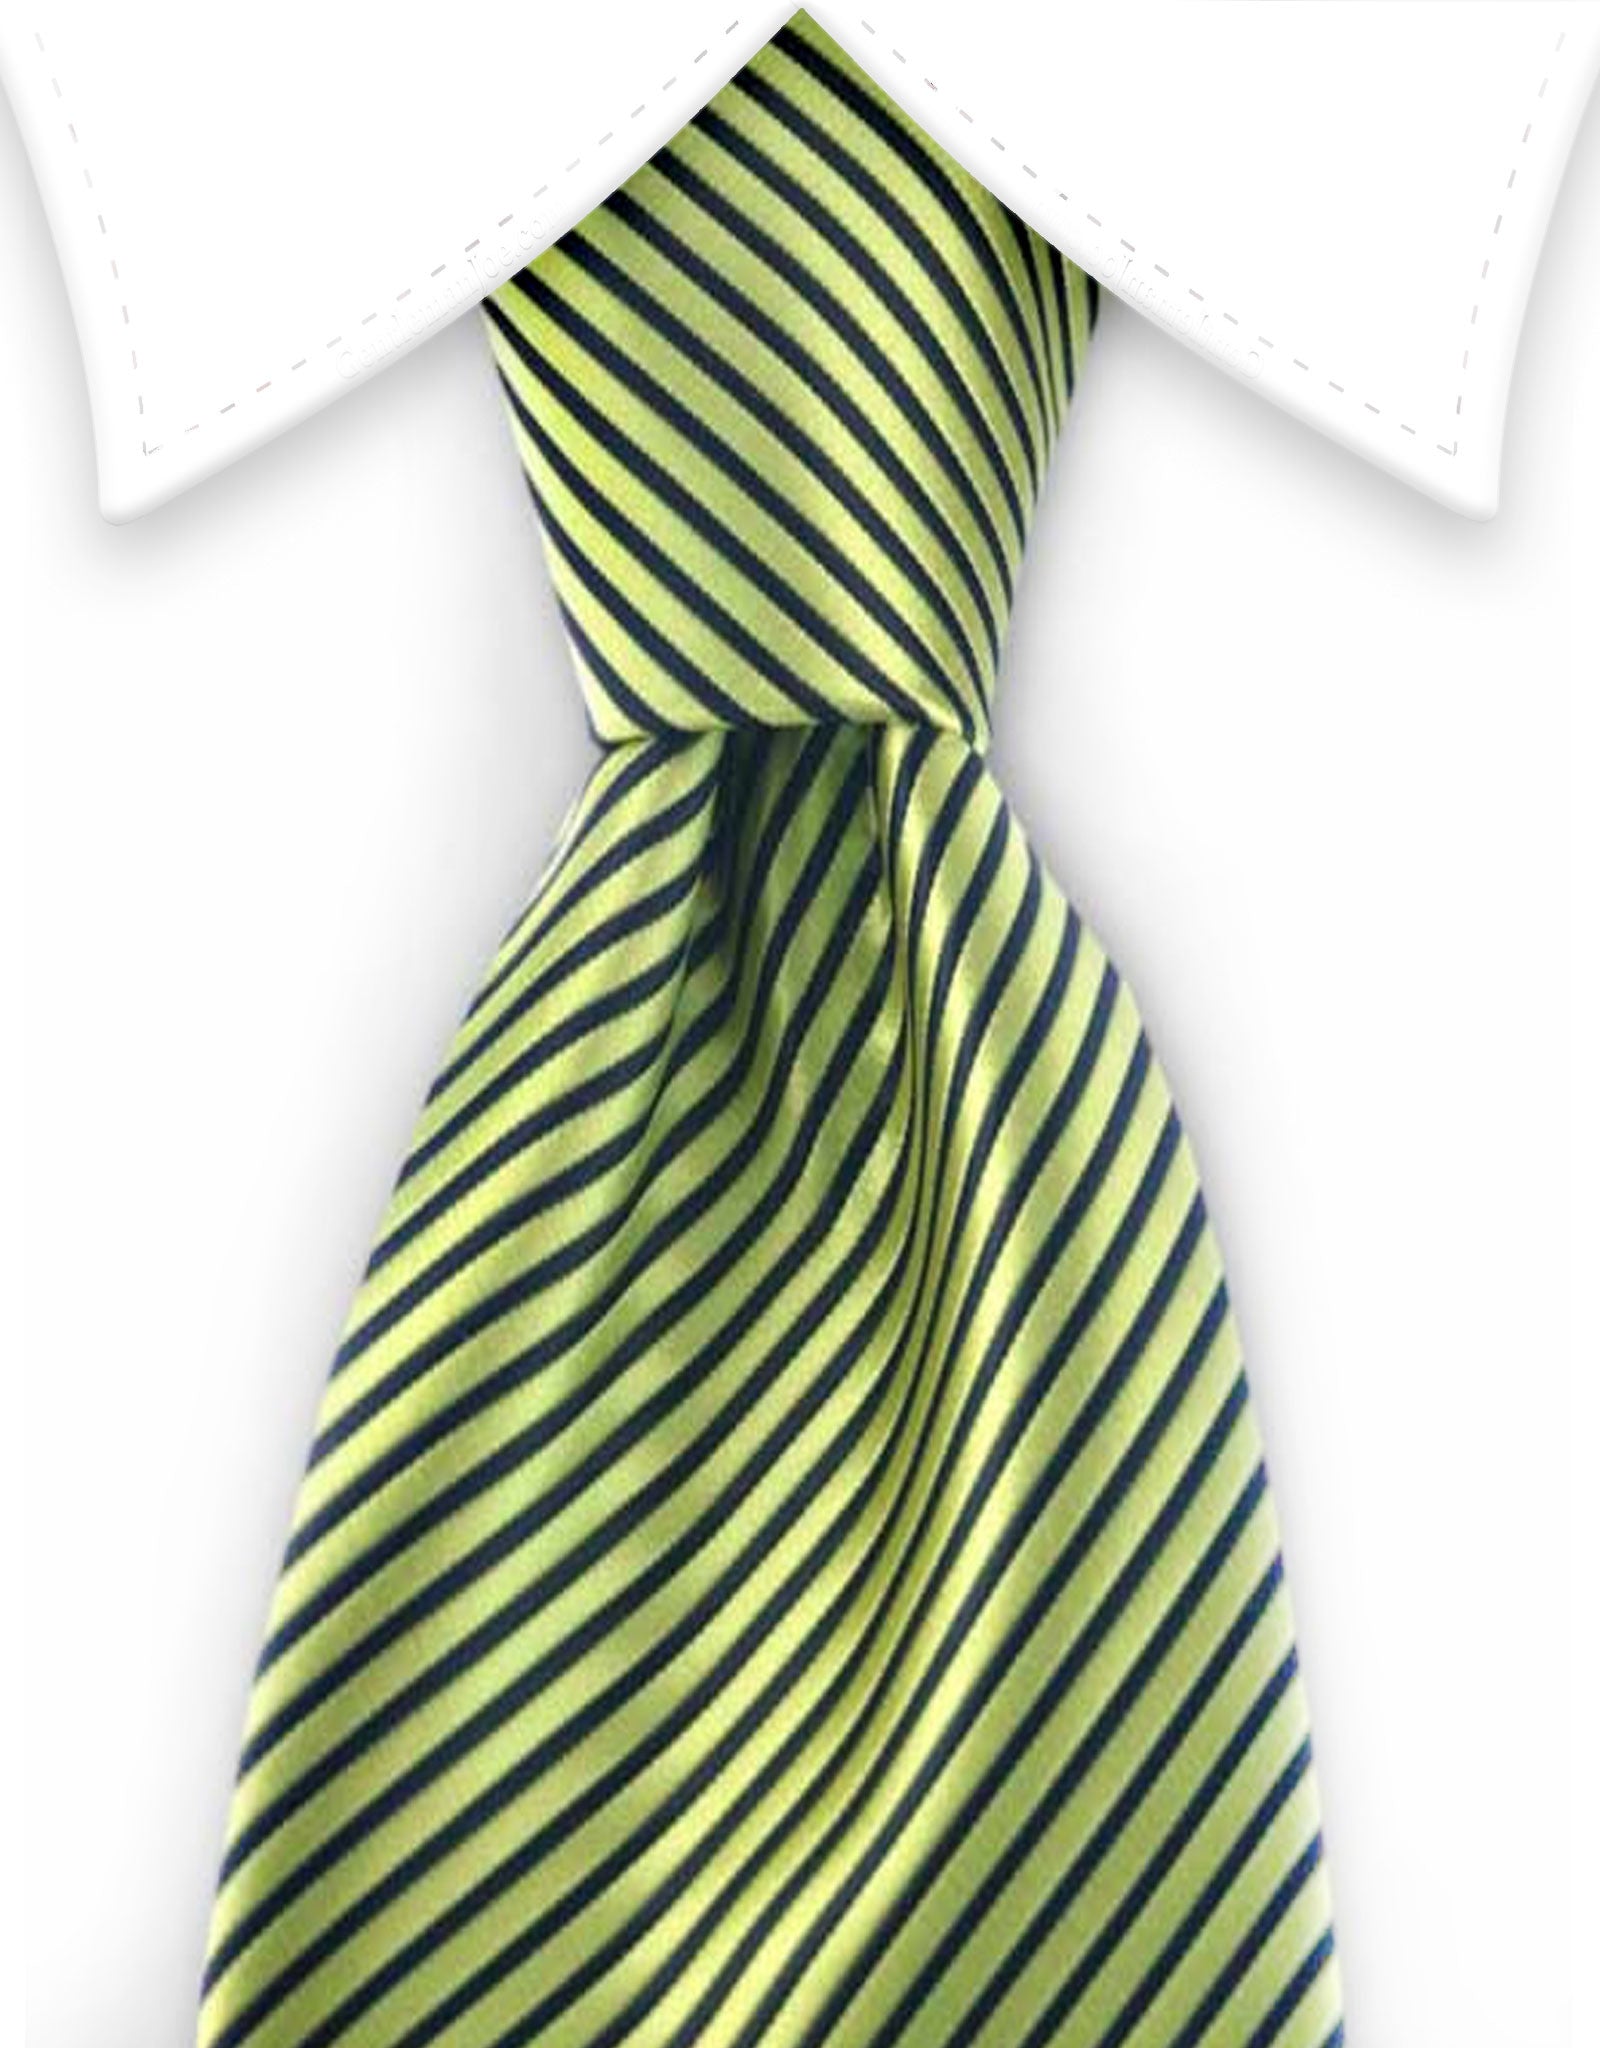 Neon green striped tie